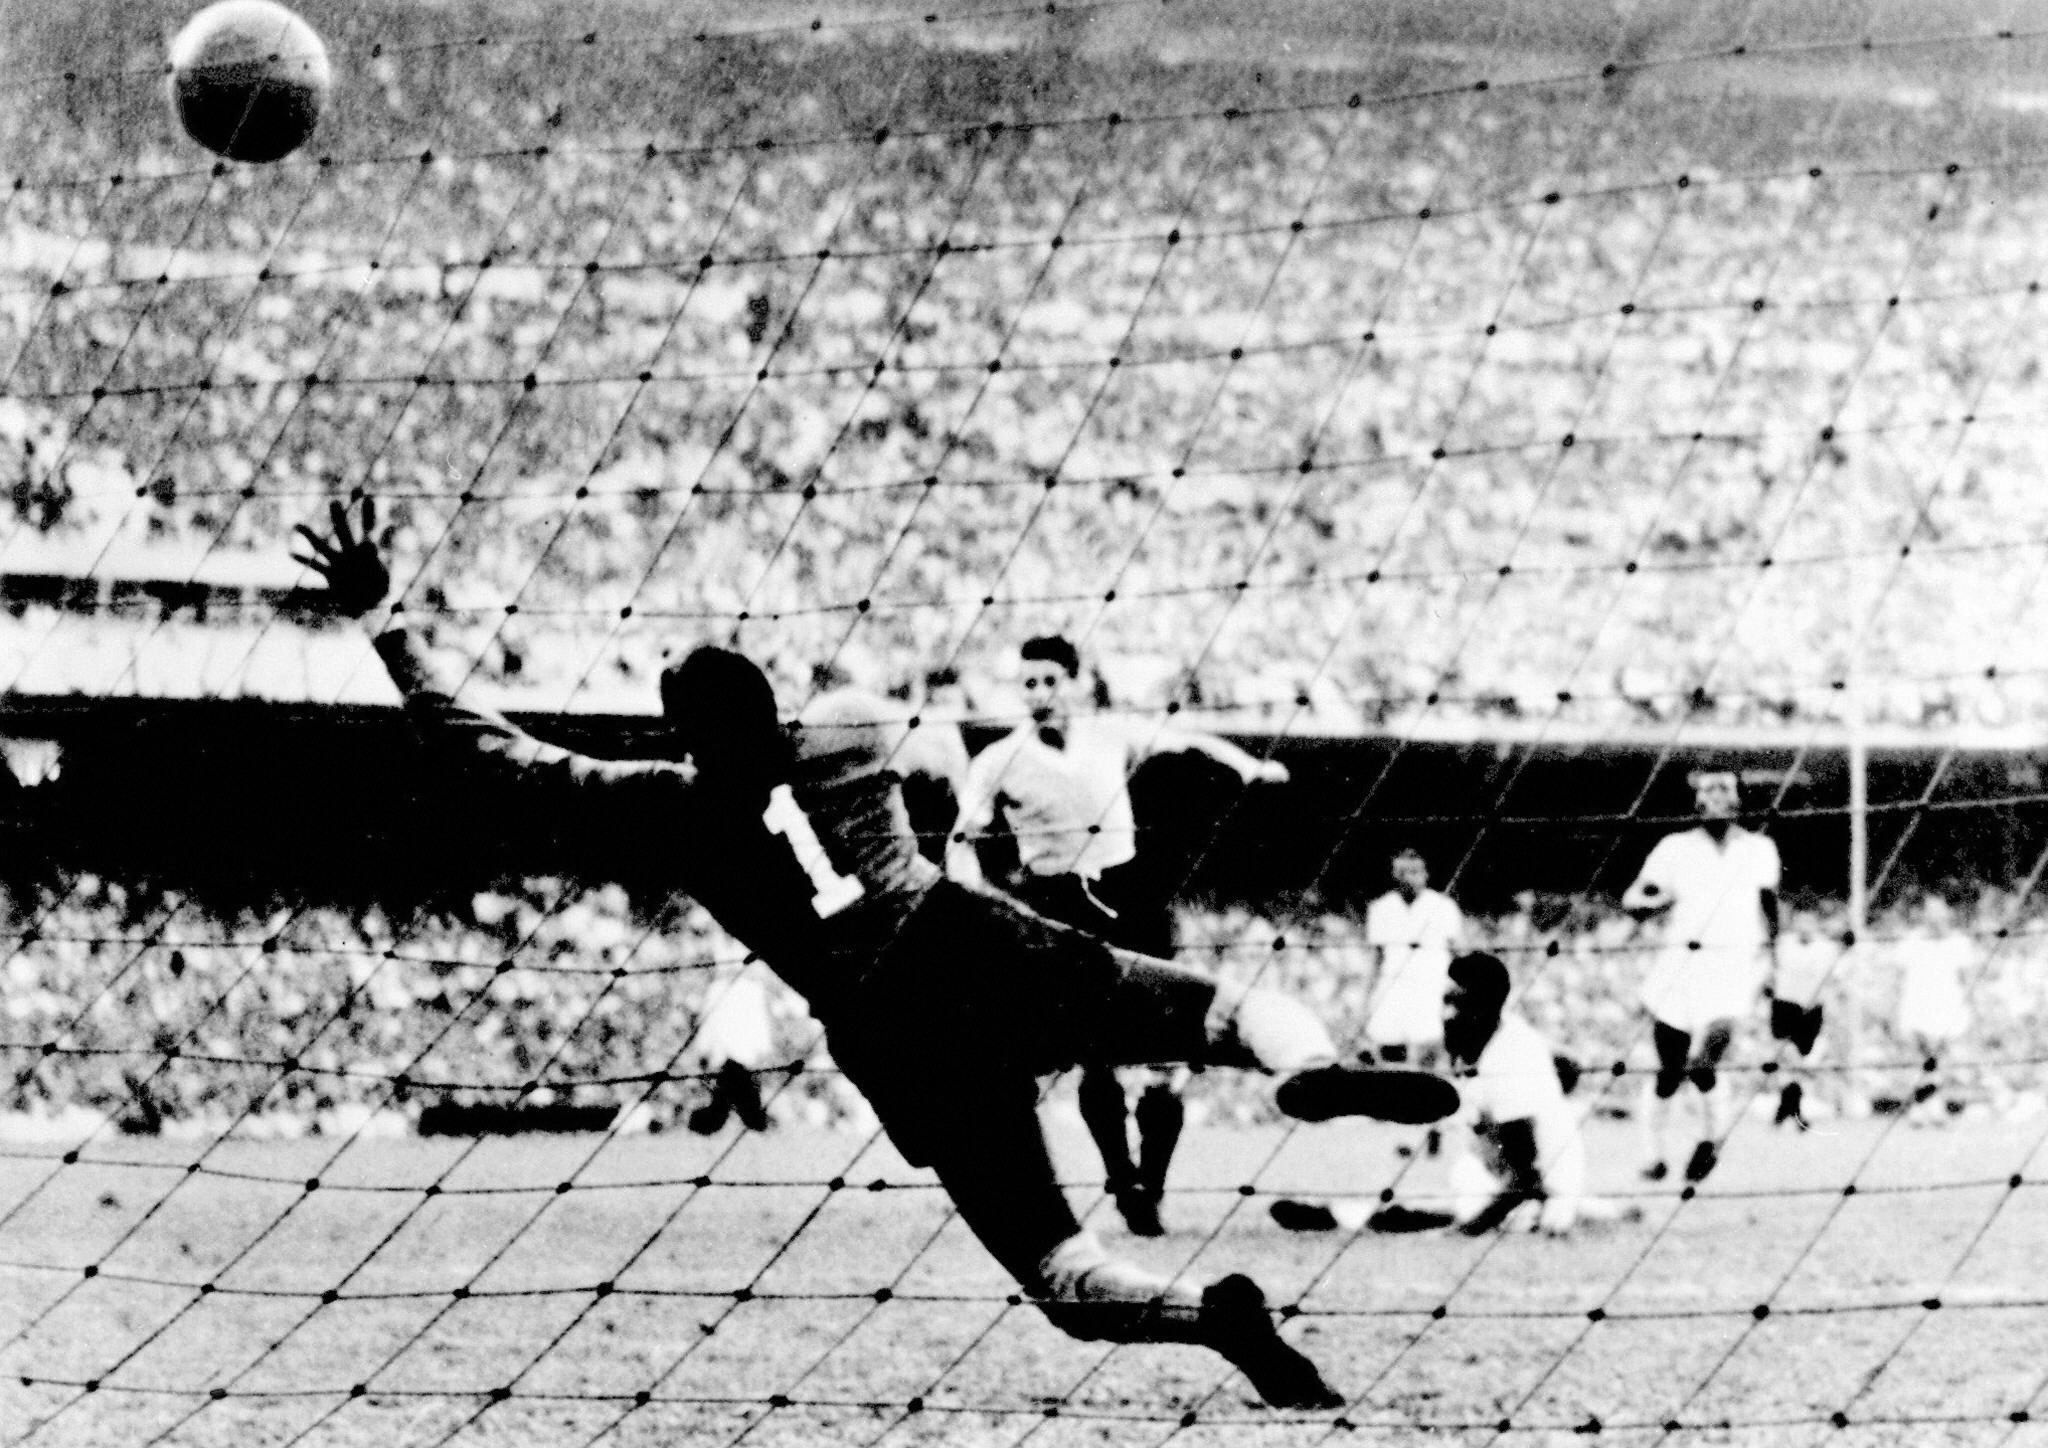 Brazil v Uruguay in the 1950 World Cup final